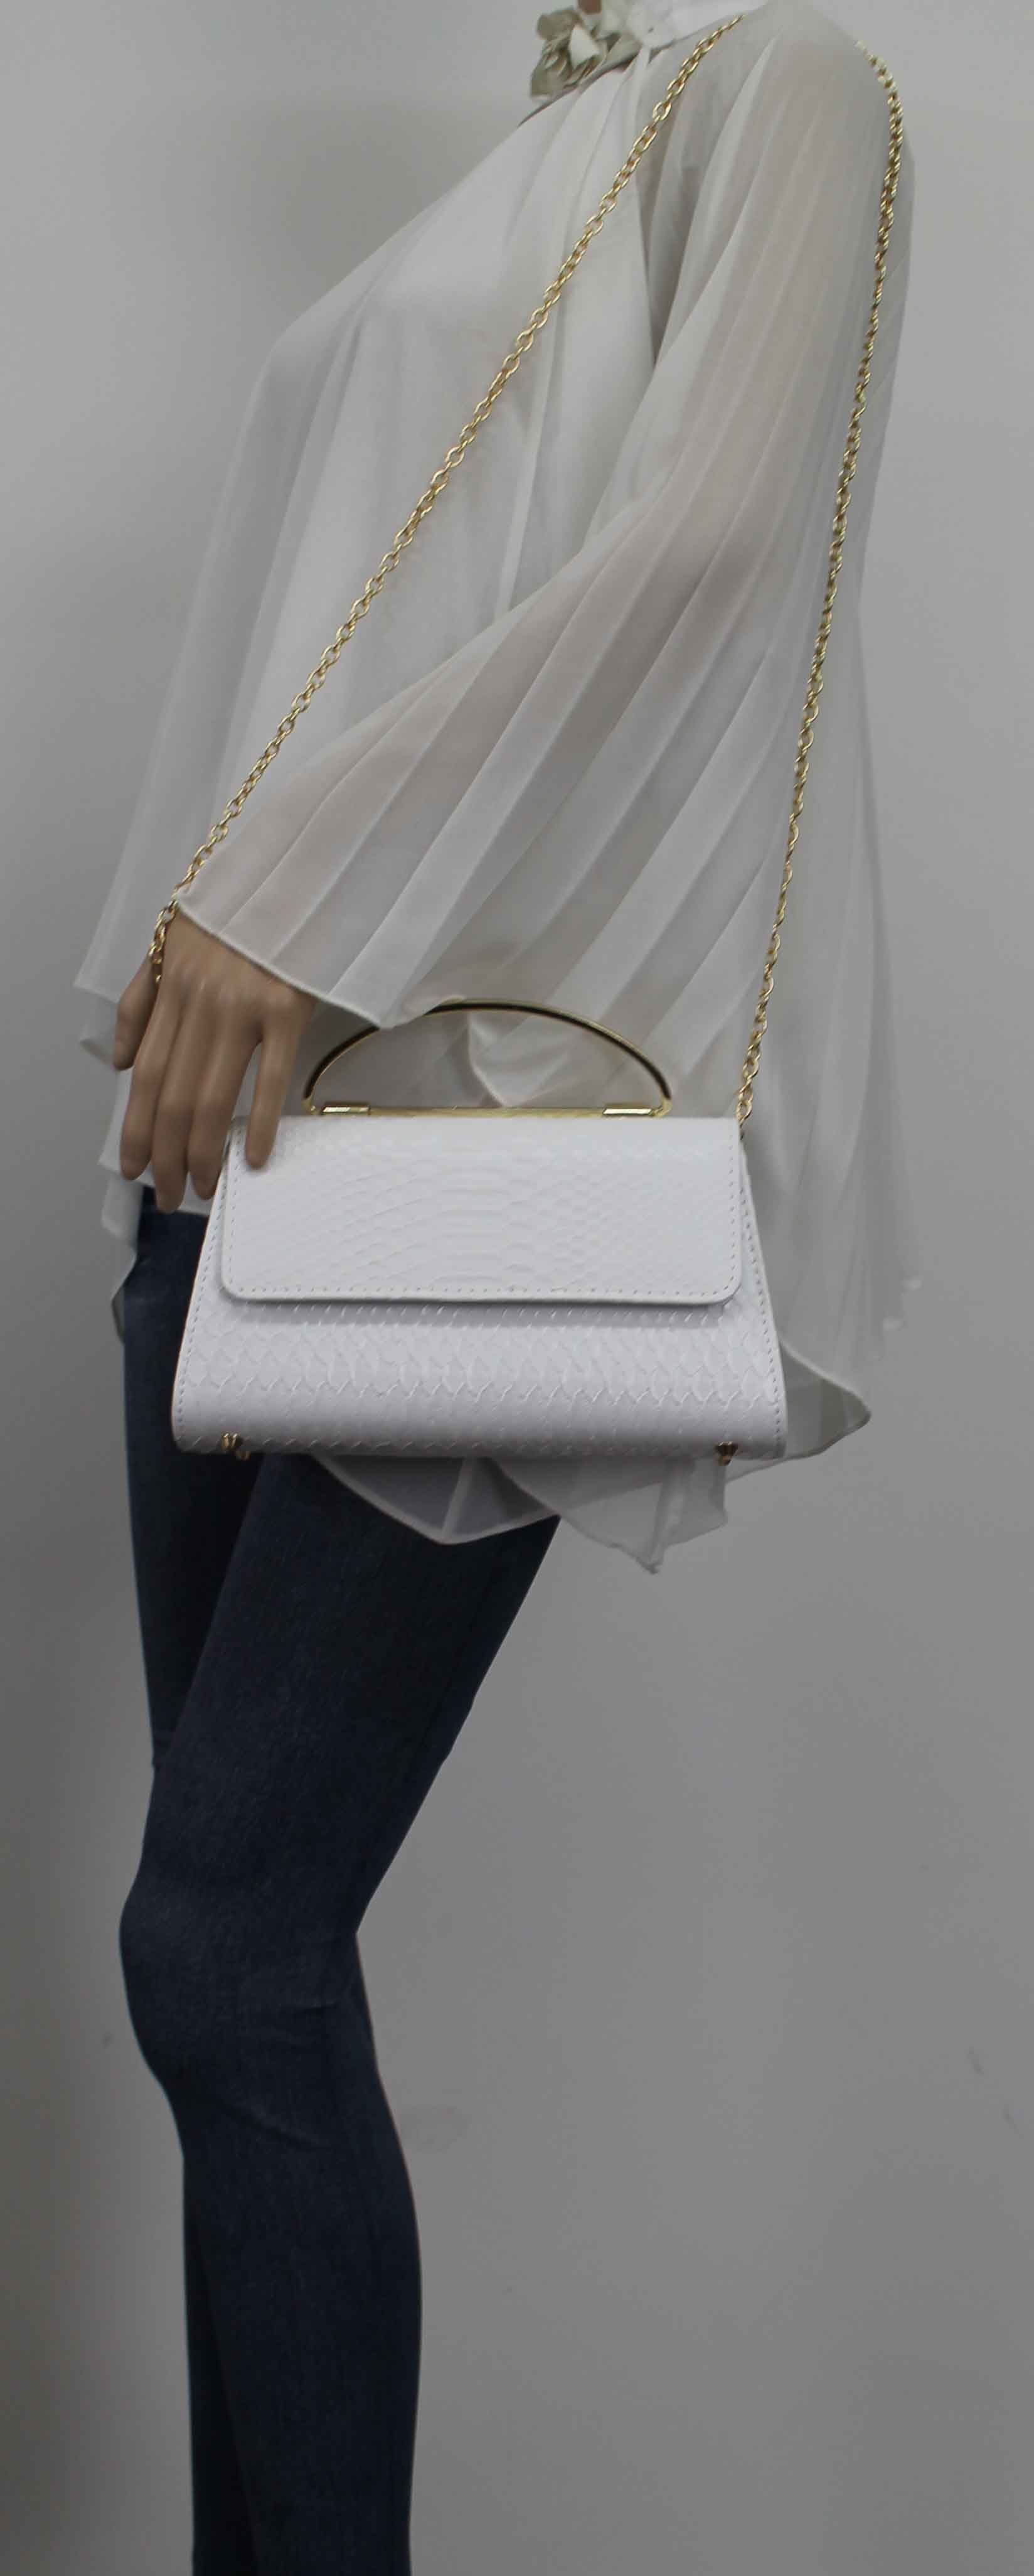 SWANKYSWANS Laura Clutch Bag White Cute Cheap Clutch Bag For Weddings School and Work